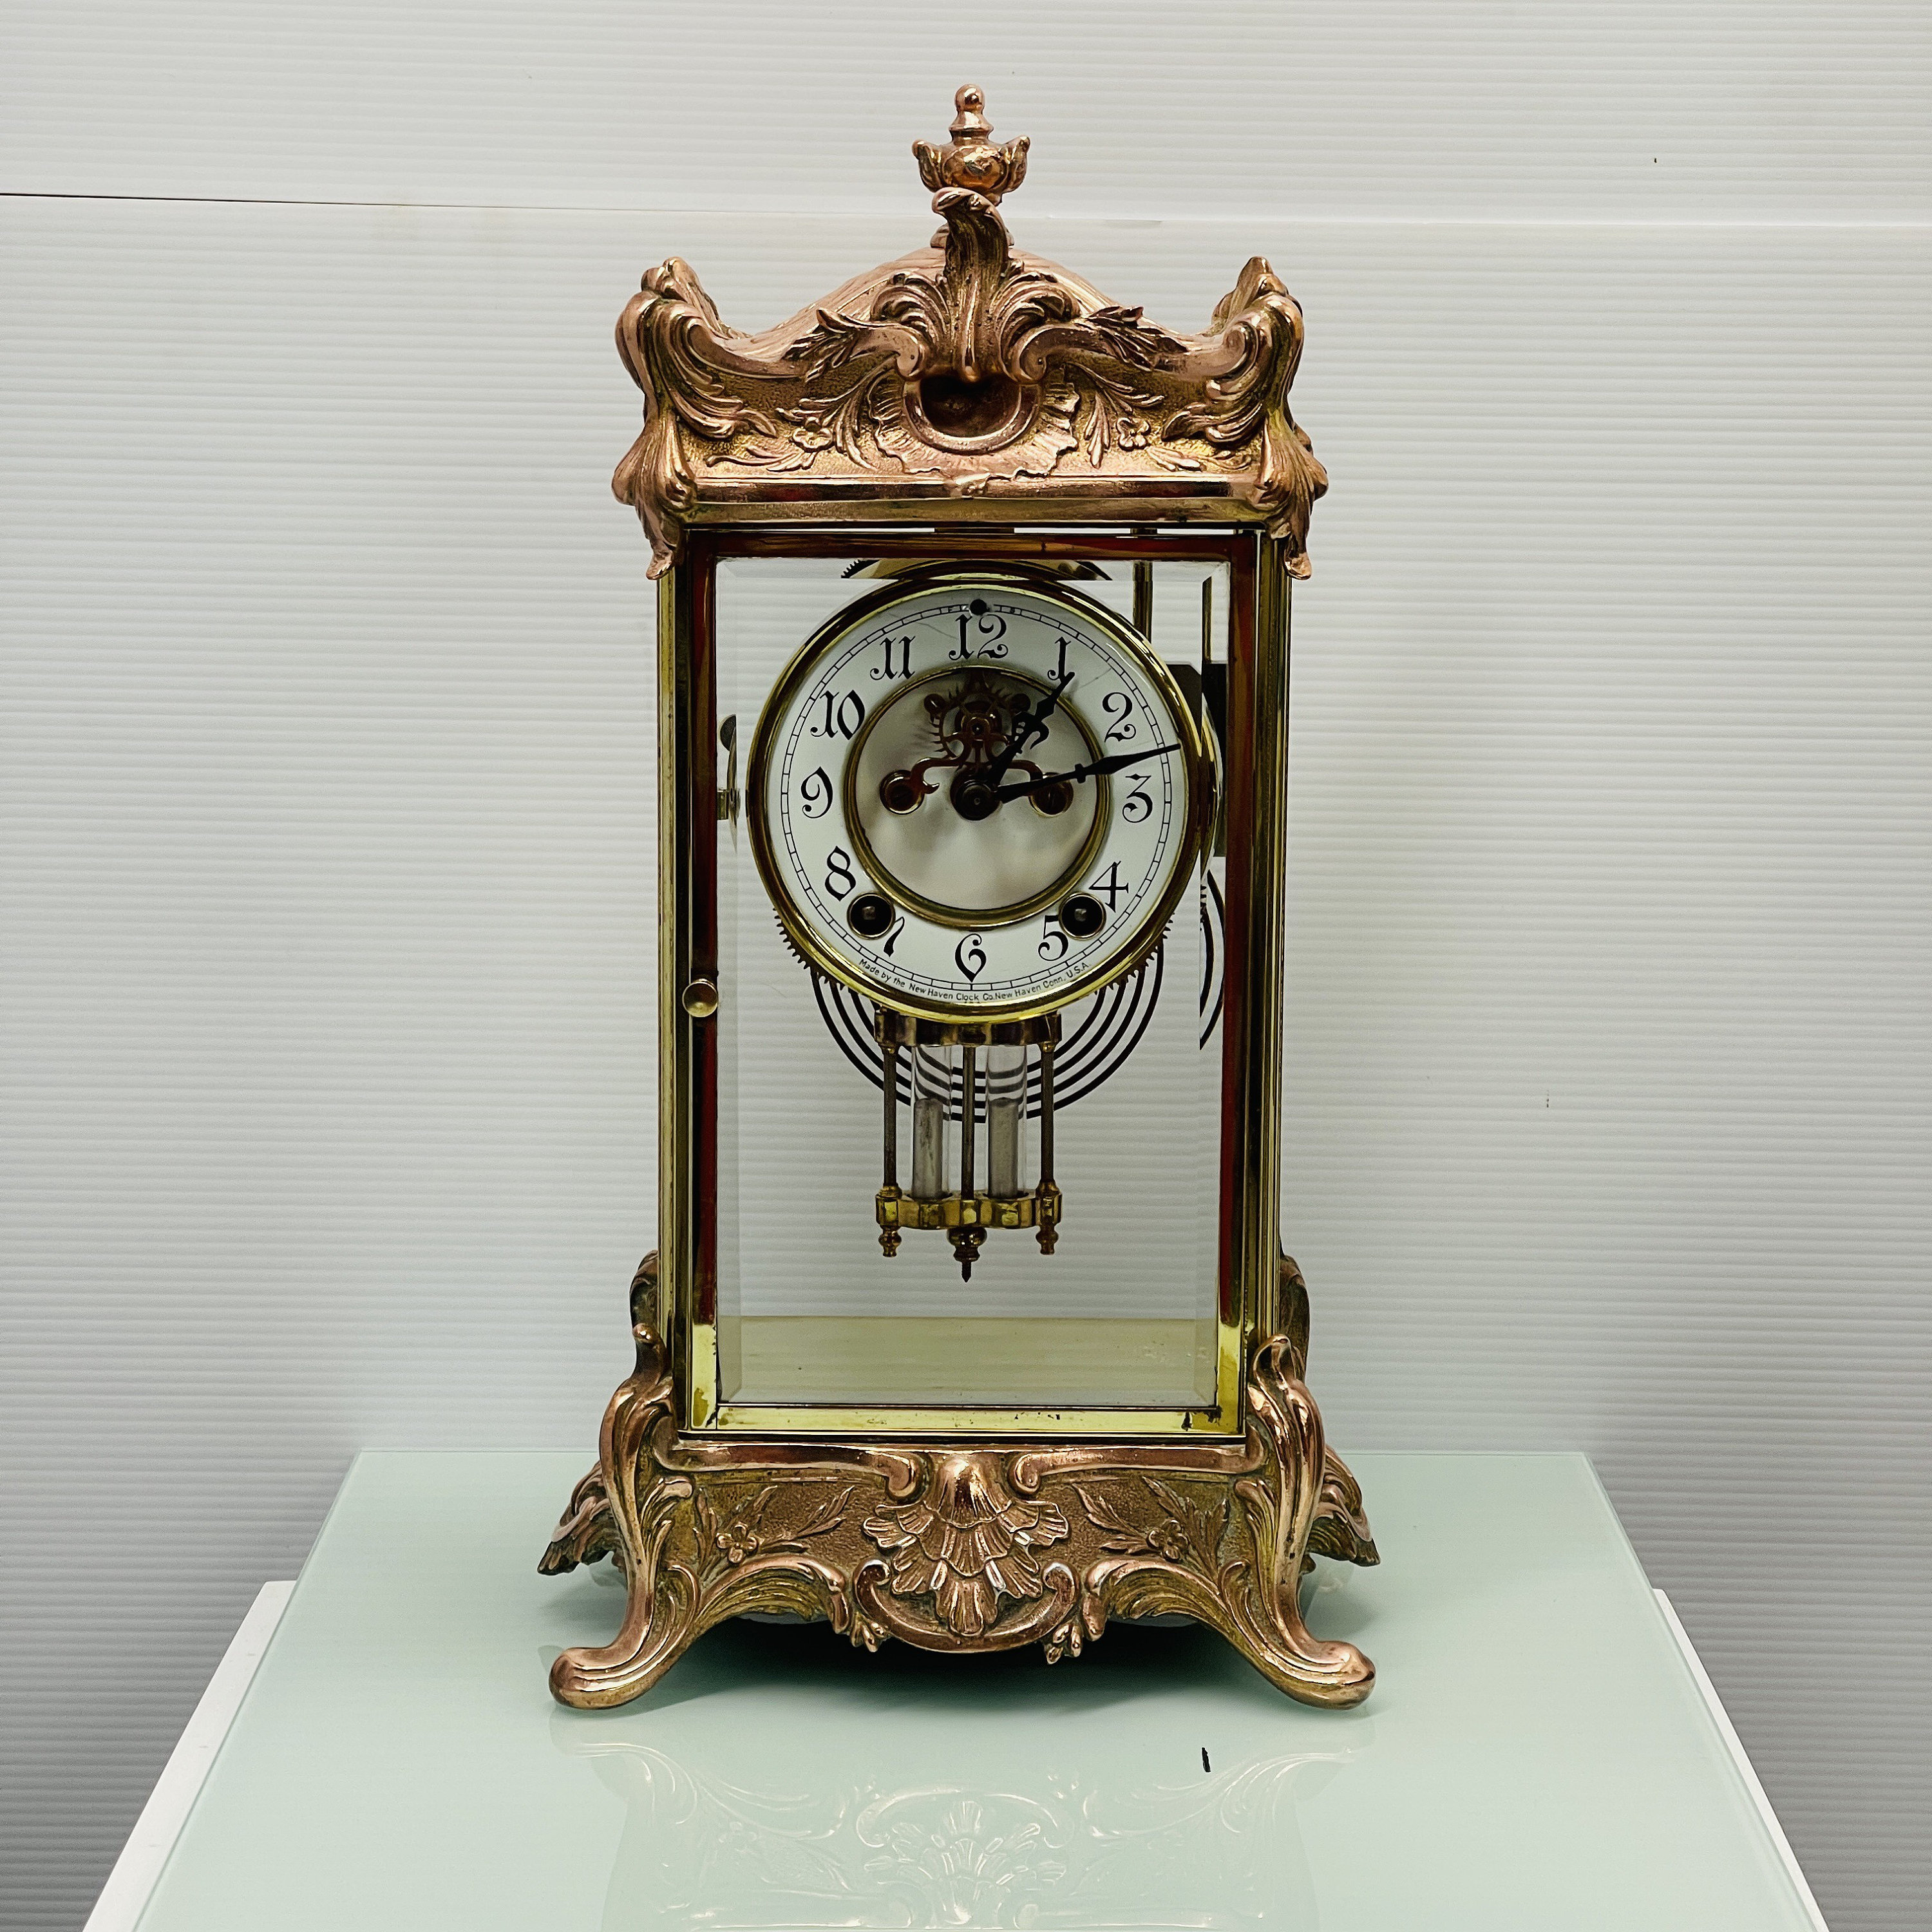 New Haven Clock Co. Crystal Regulator No. 434 